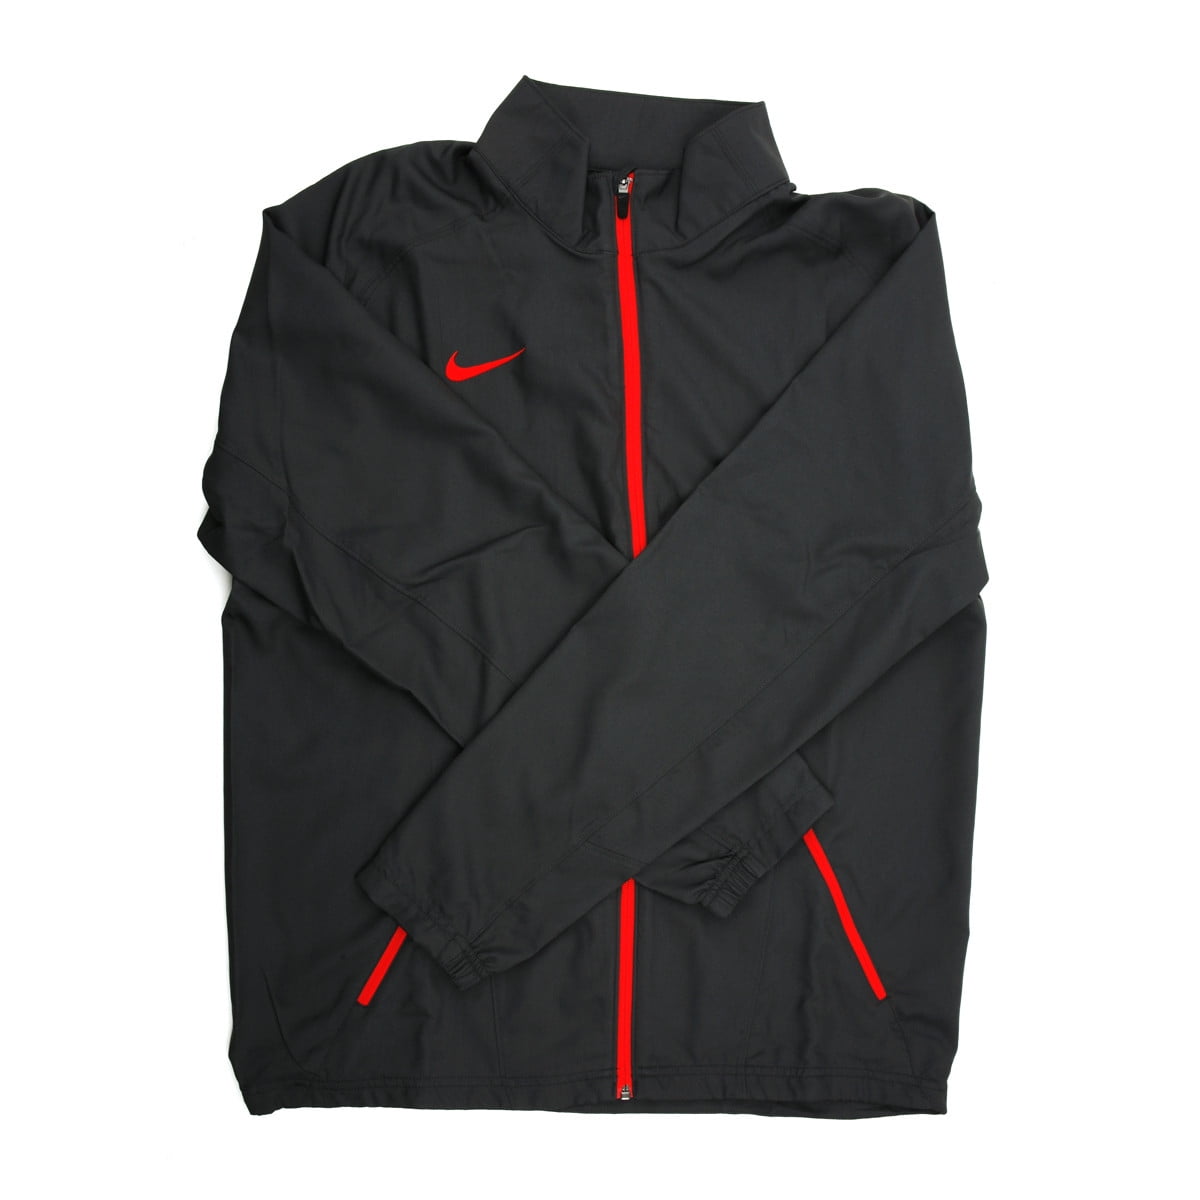 Nike - Nike Dri-FIT Men's Charcoal/Red Full-Zip Jacket - Medium ...